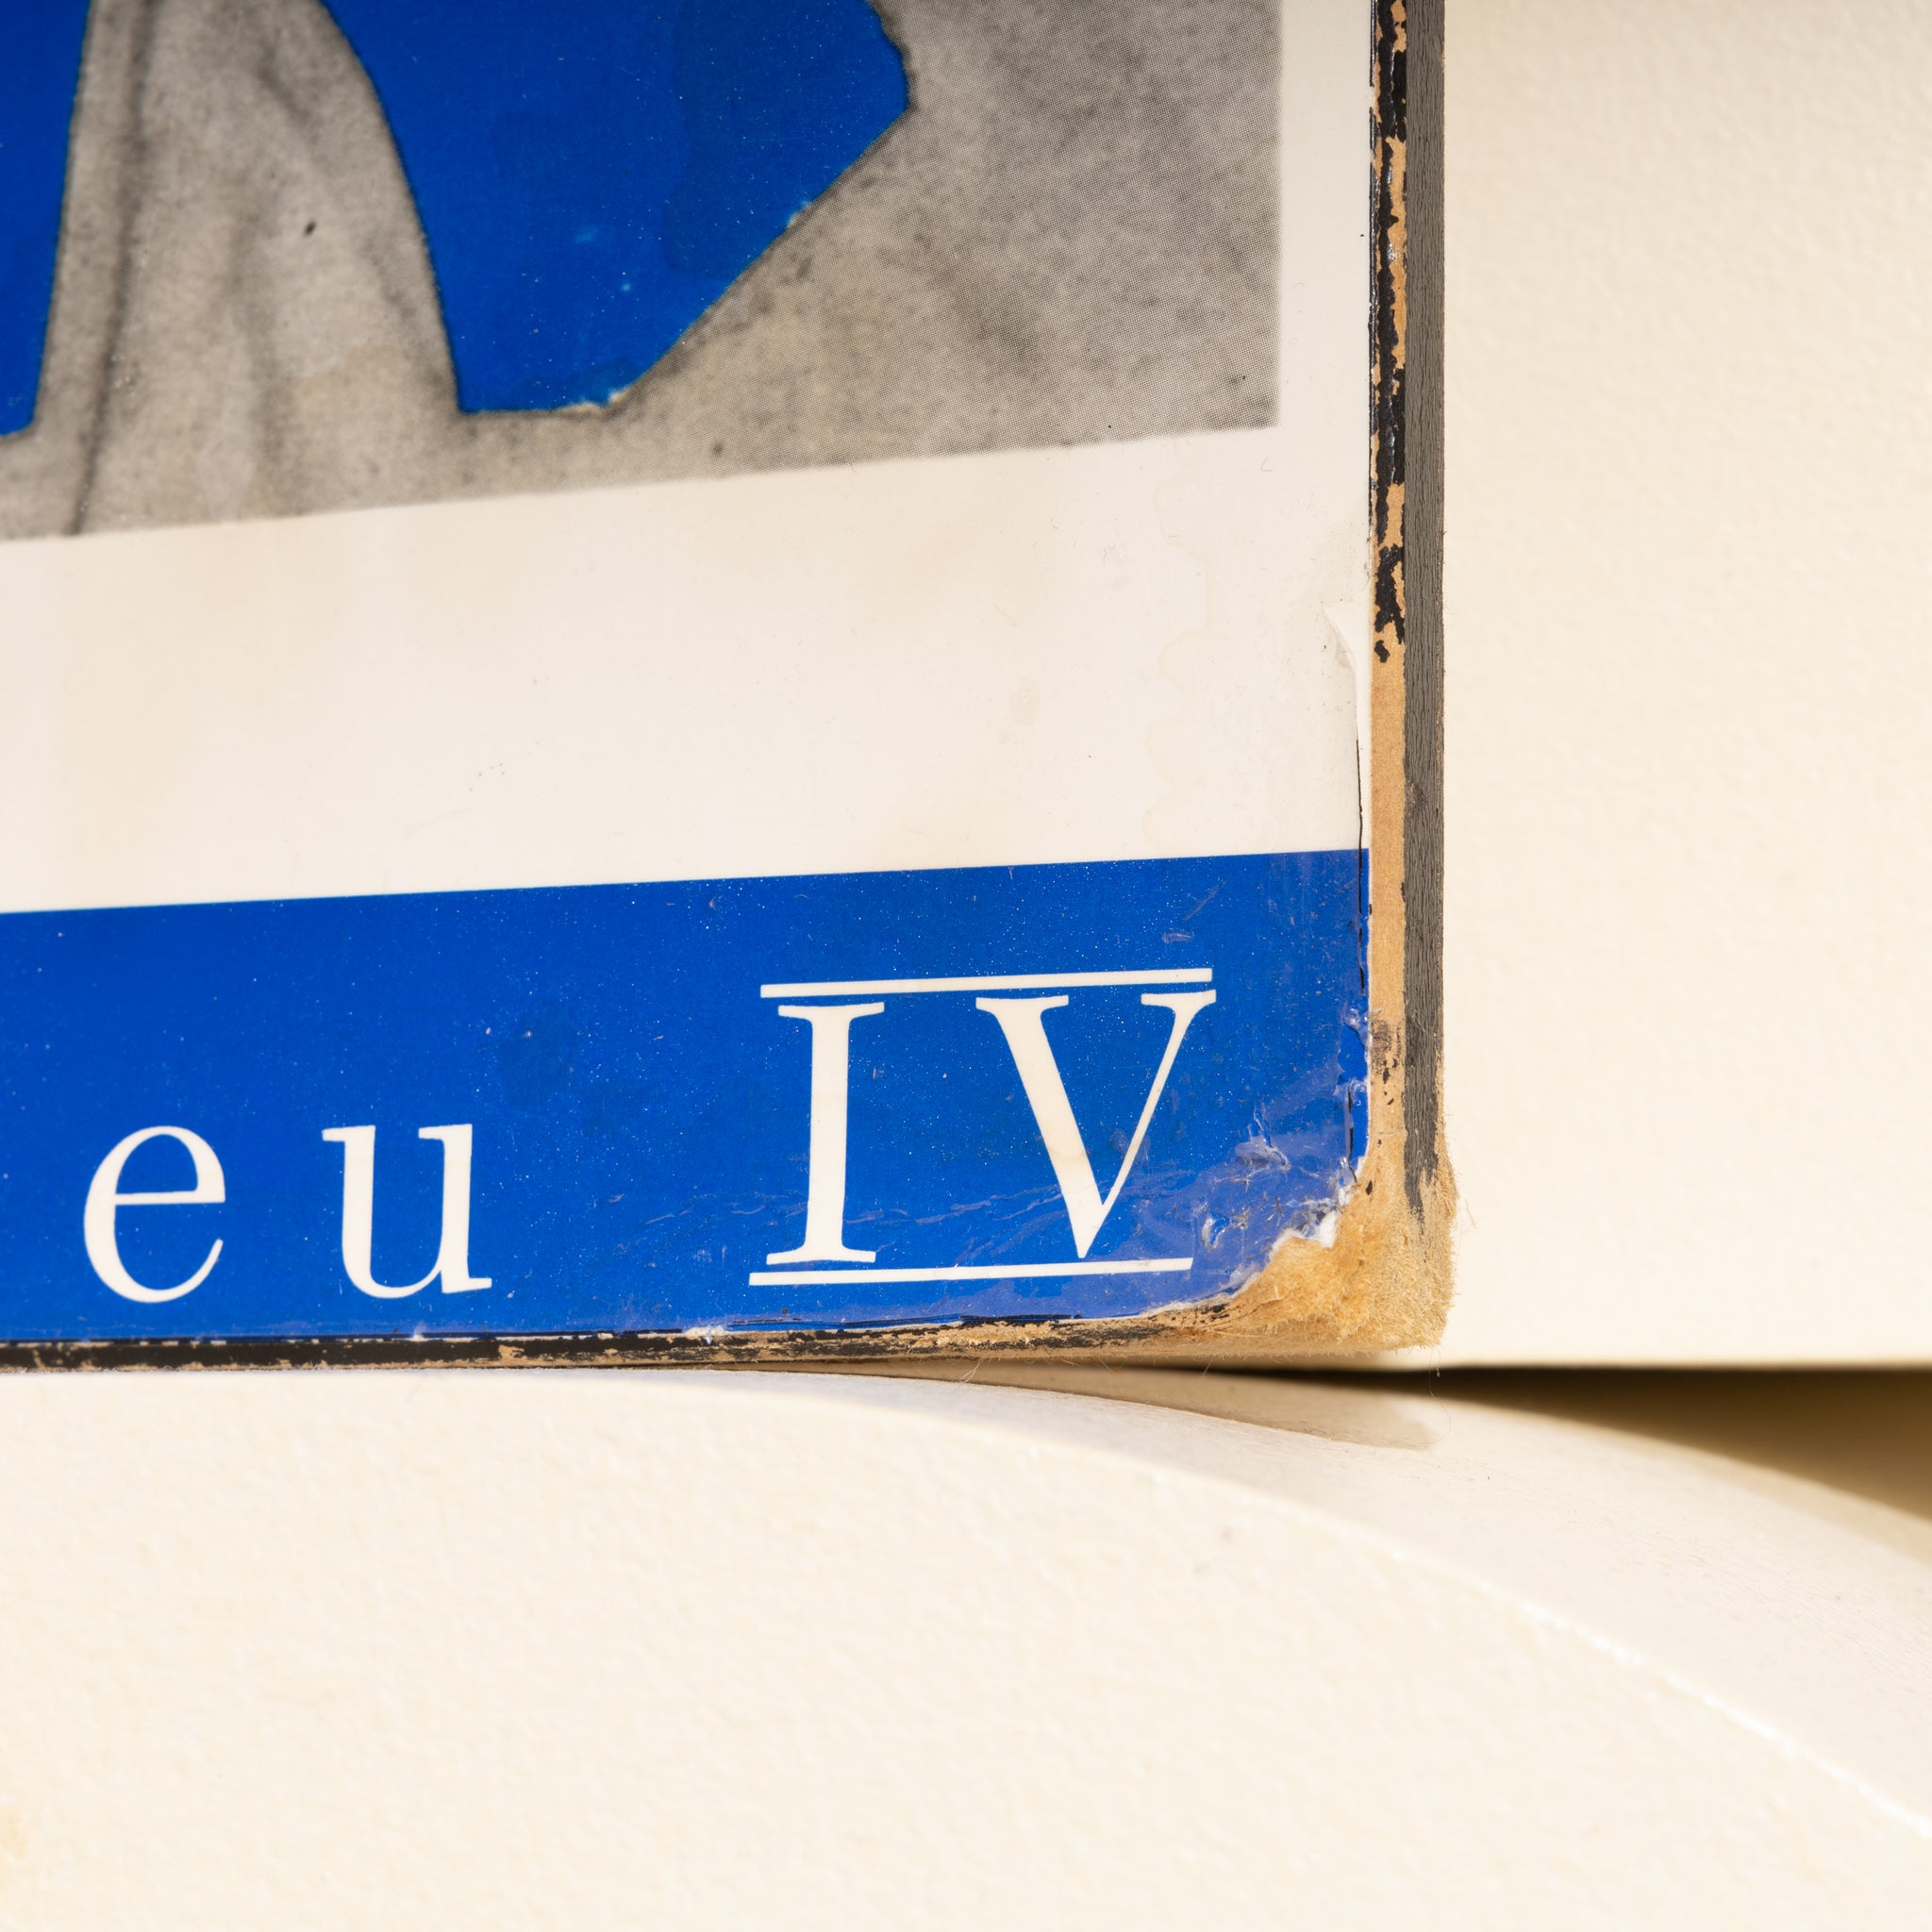 Henri Matisse 'Nu Bleu IV' Print